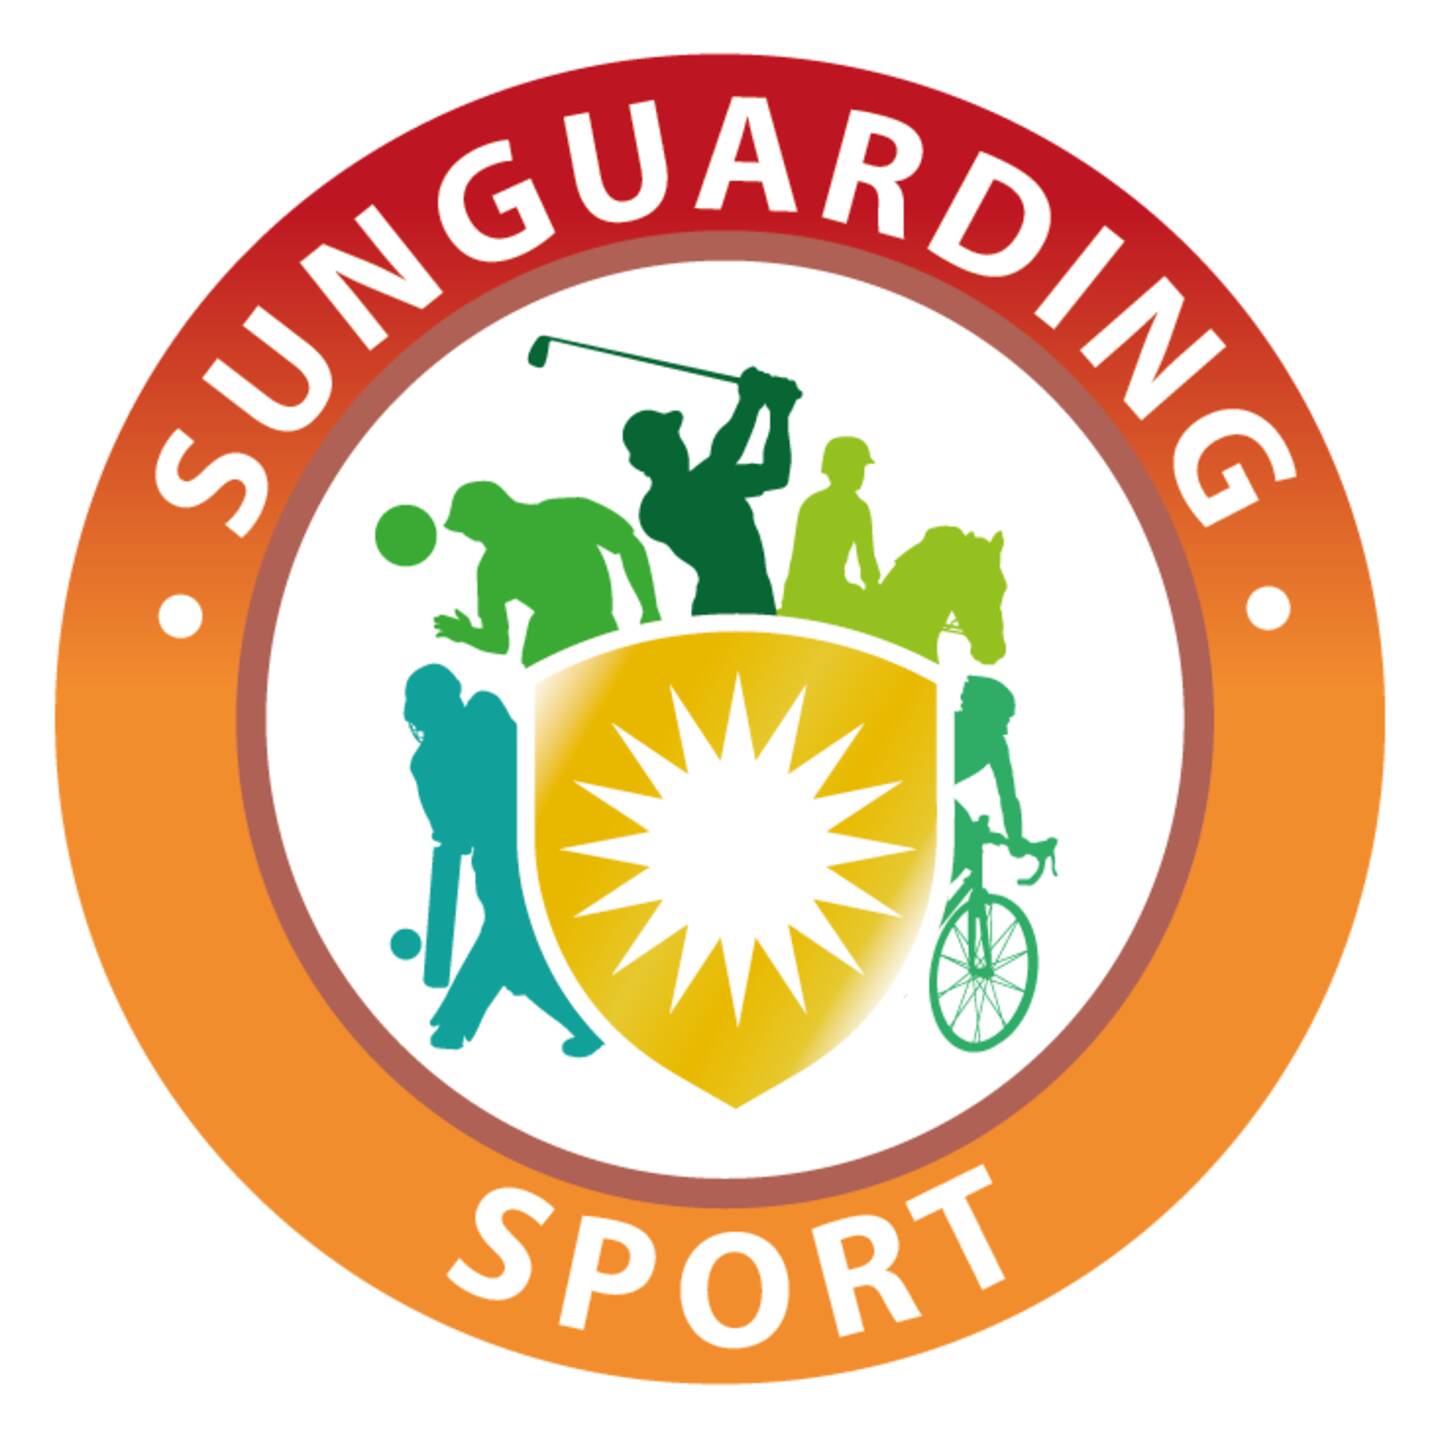 Sungaurding Sport logo.